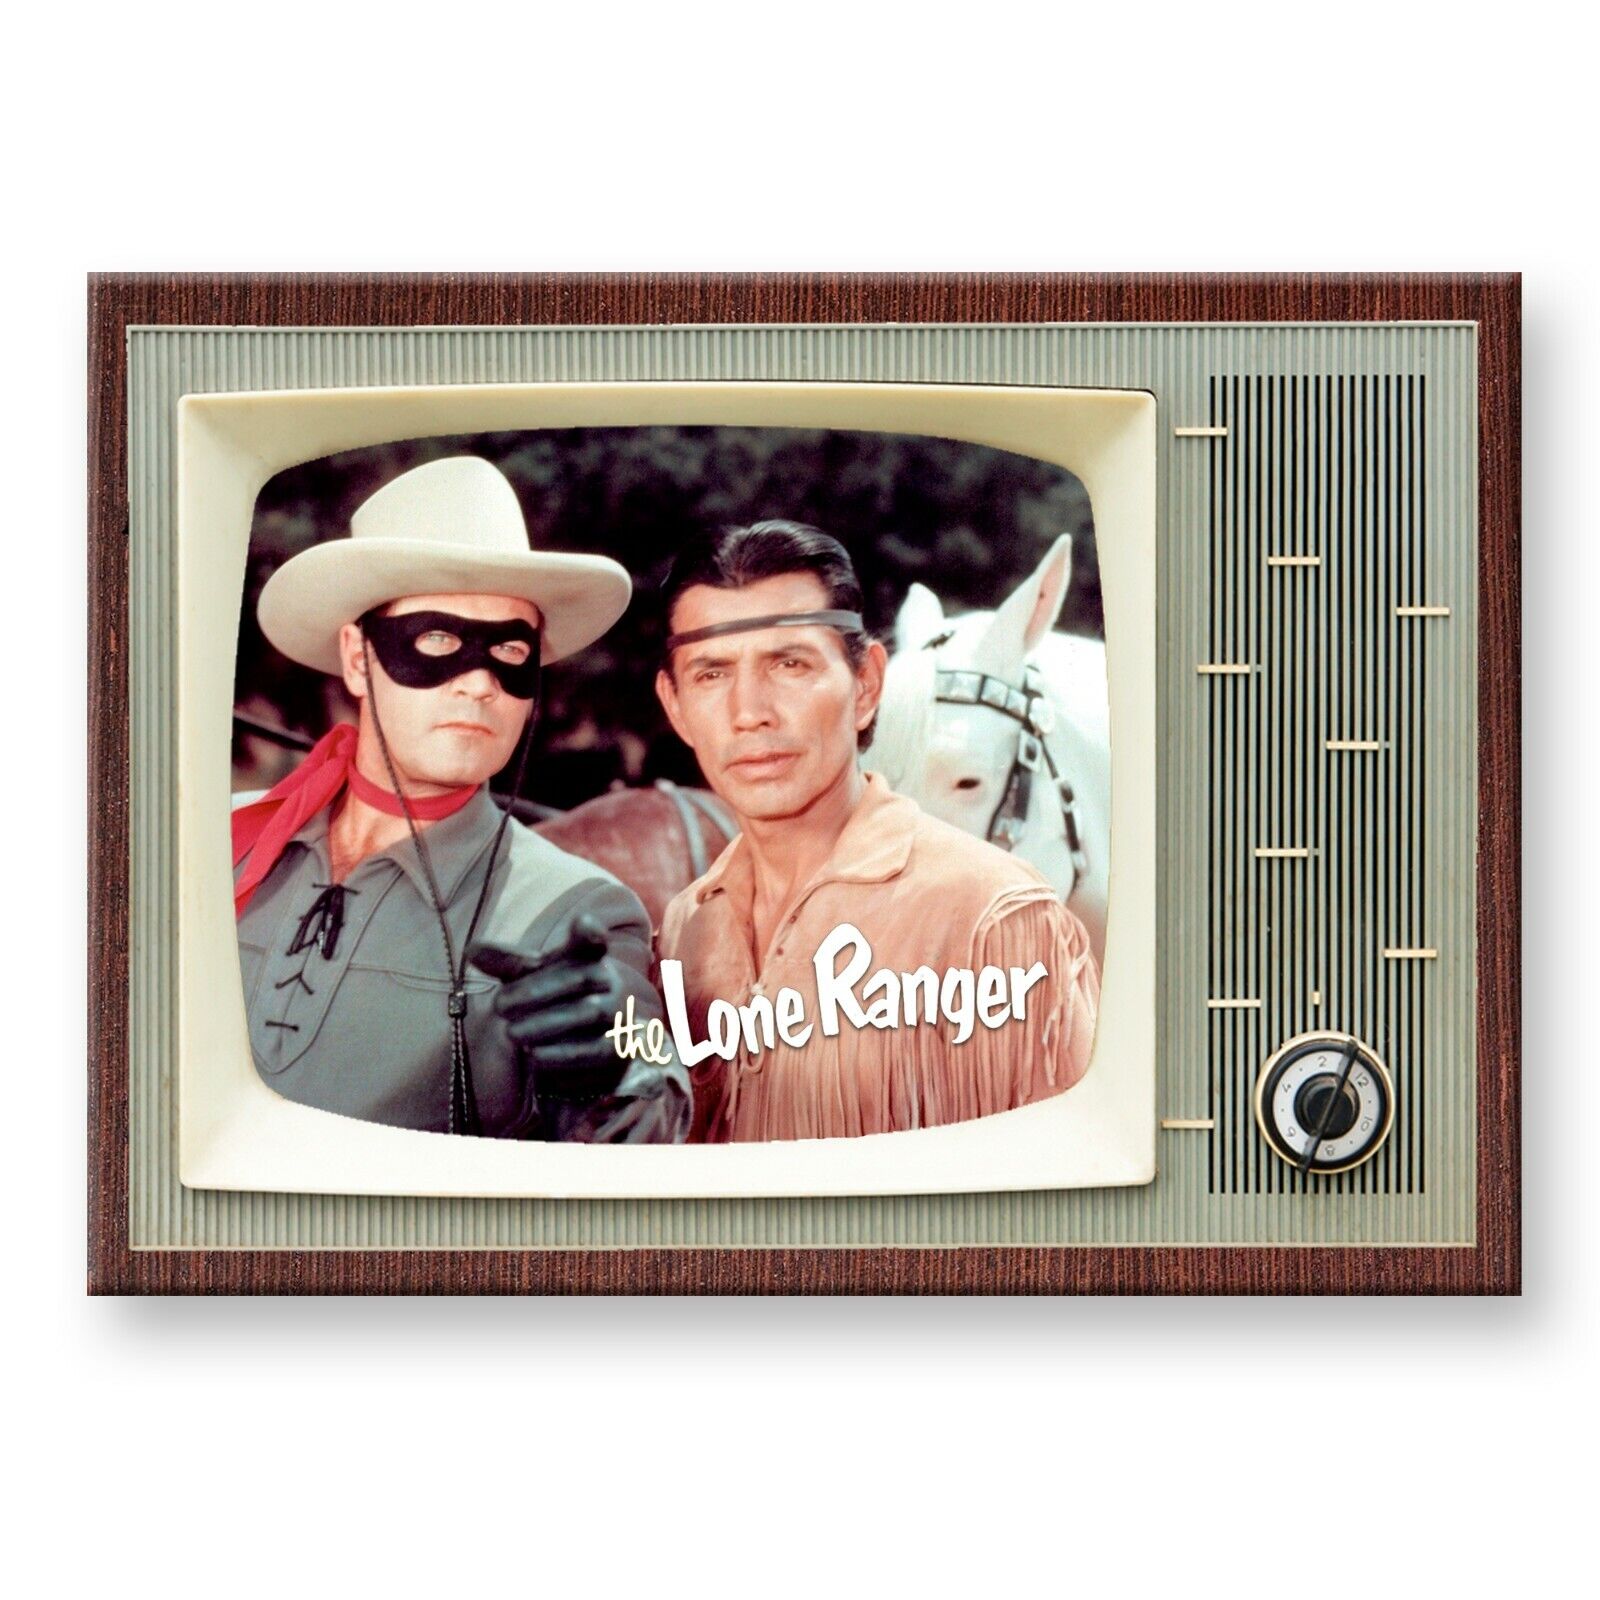 THE LONE RANGER TV Show Classic Retro TV 3.5 inches x 2.5 inches FRIDGE MAGNET